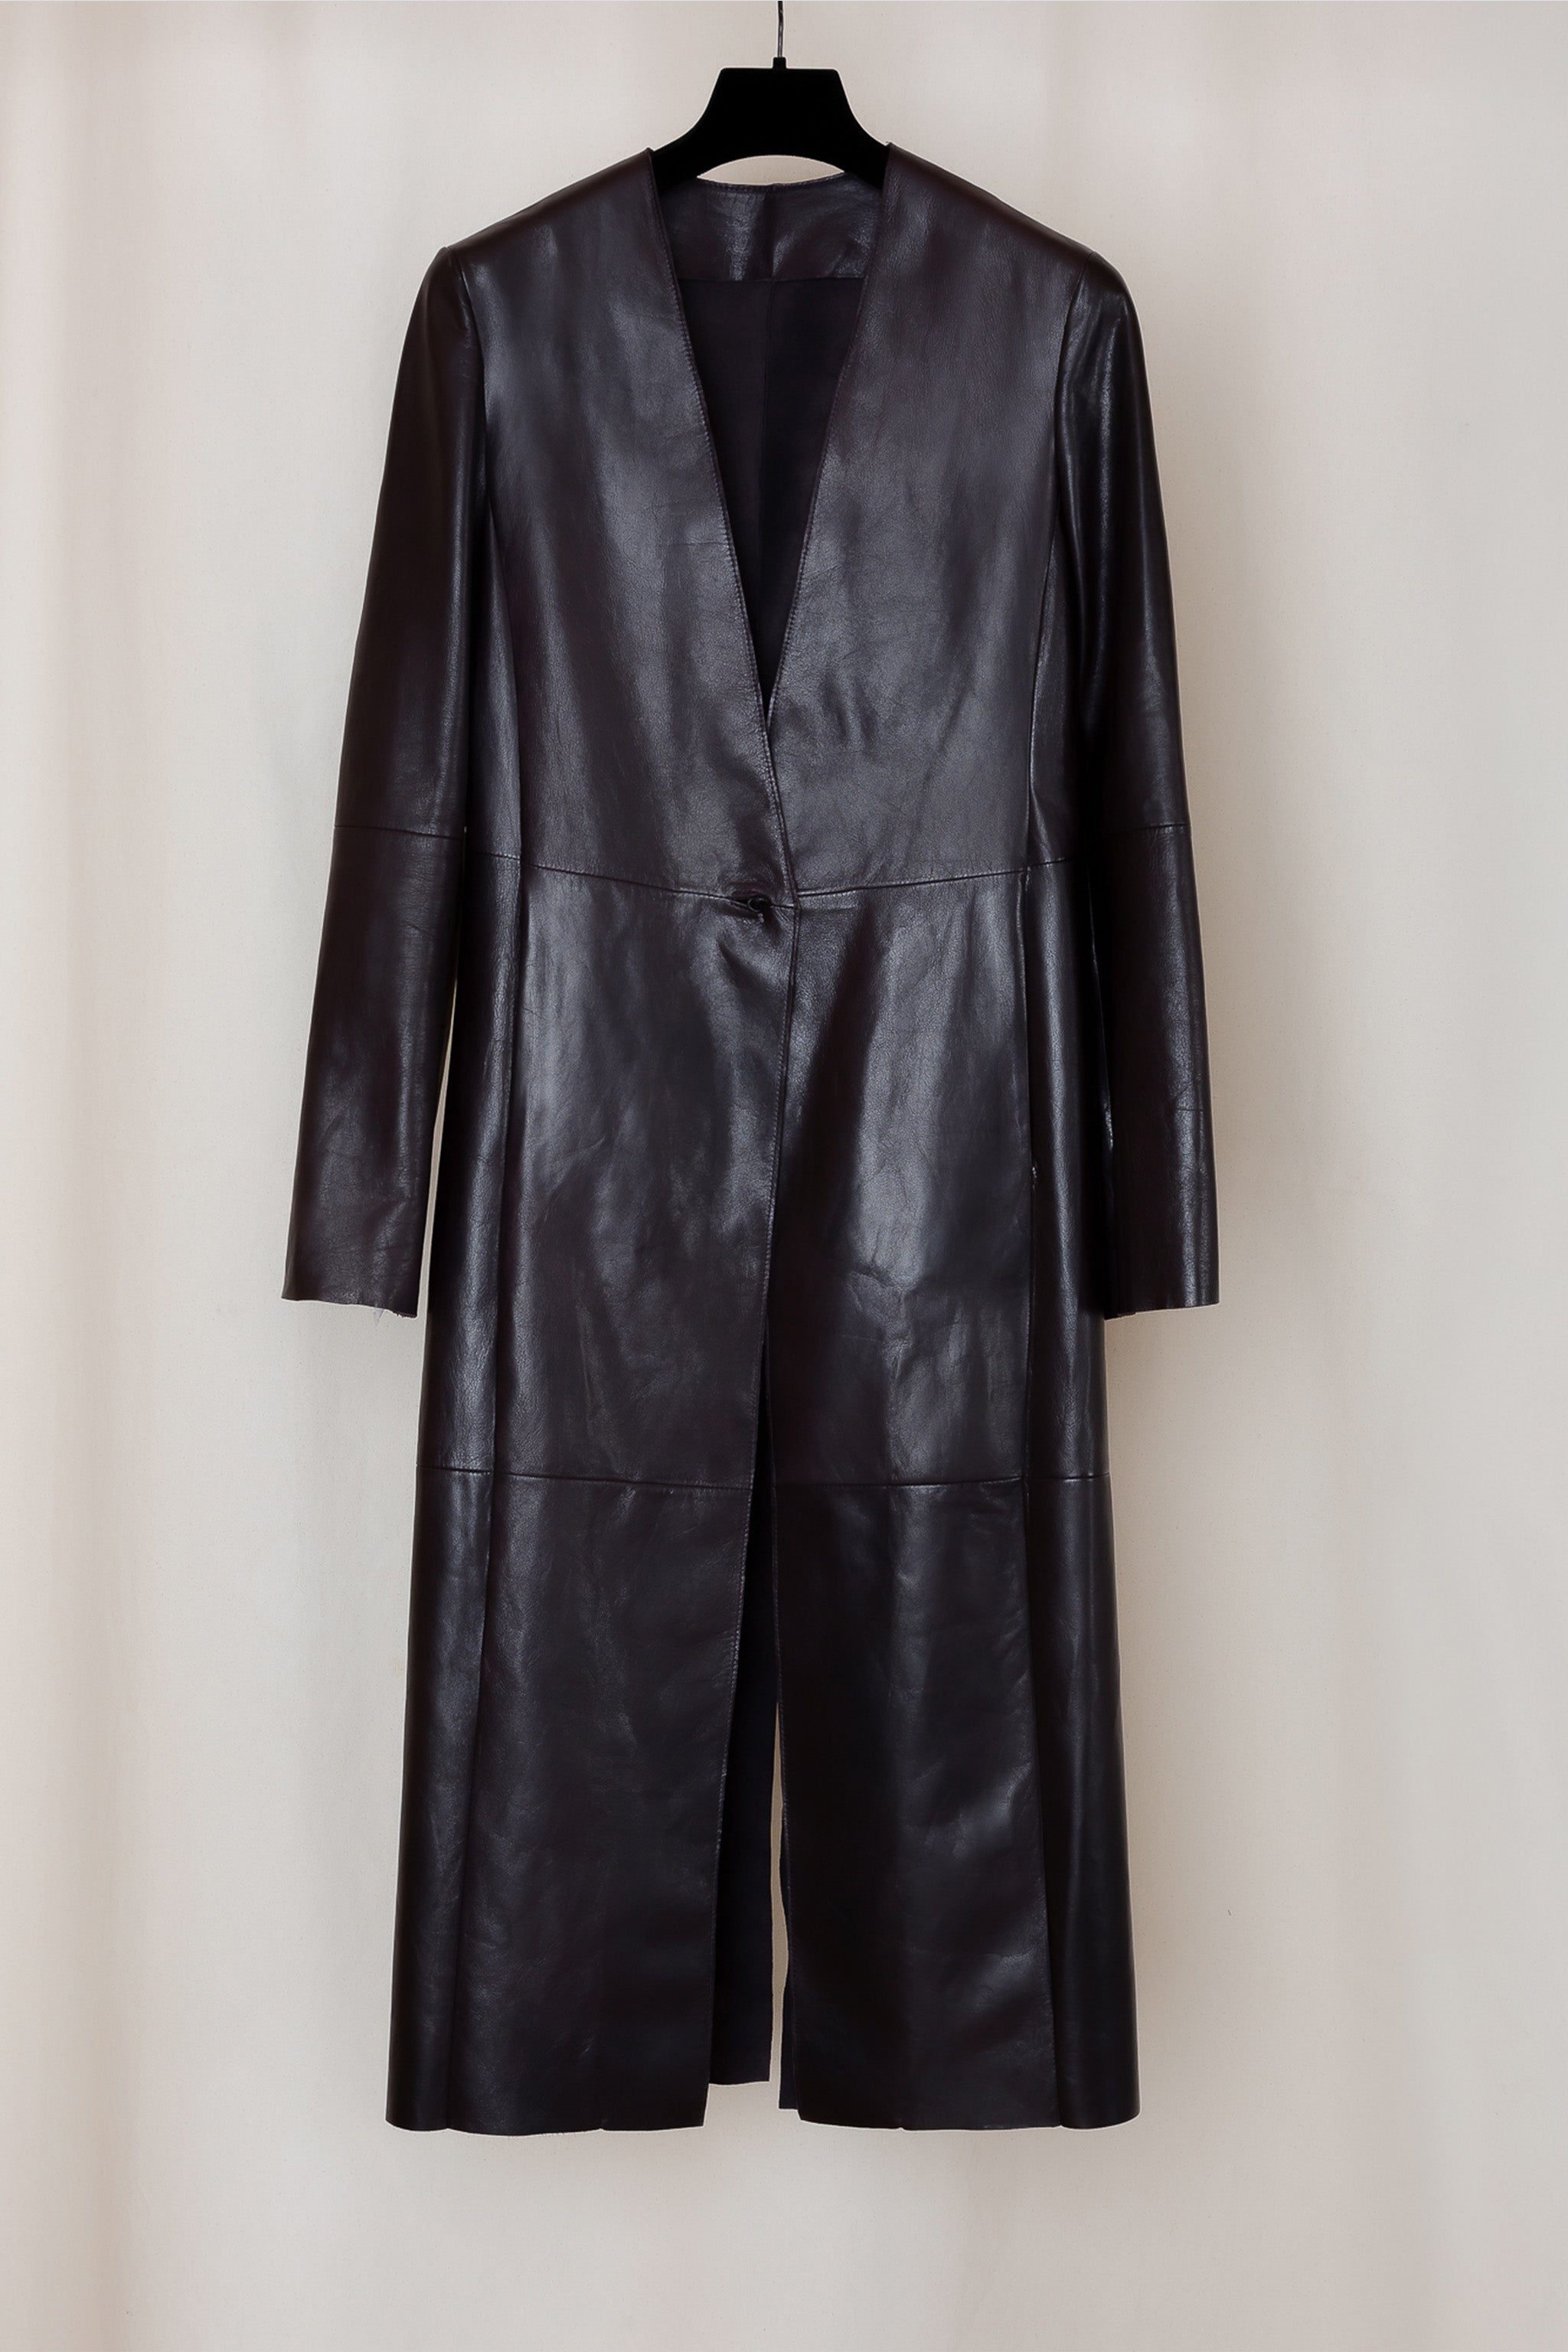 No.179 Black Leather Leather Slit Coat